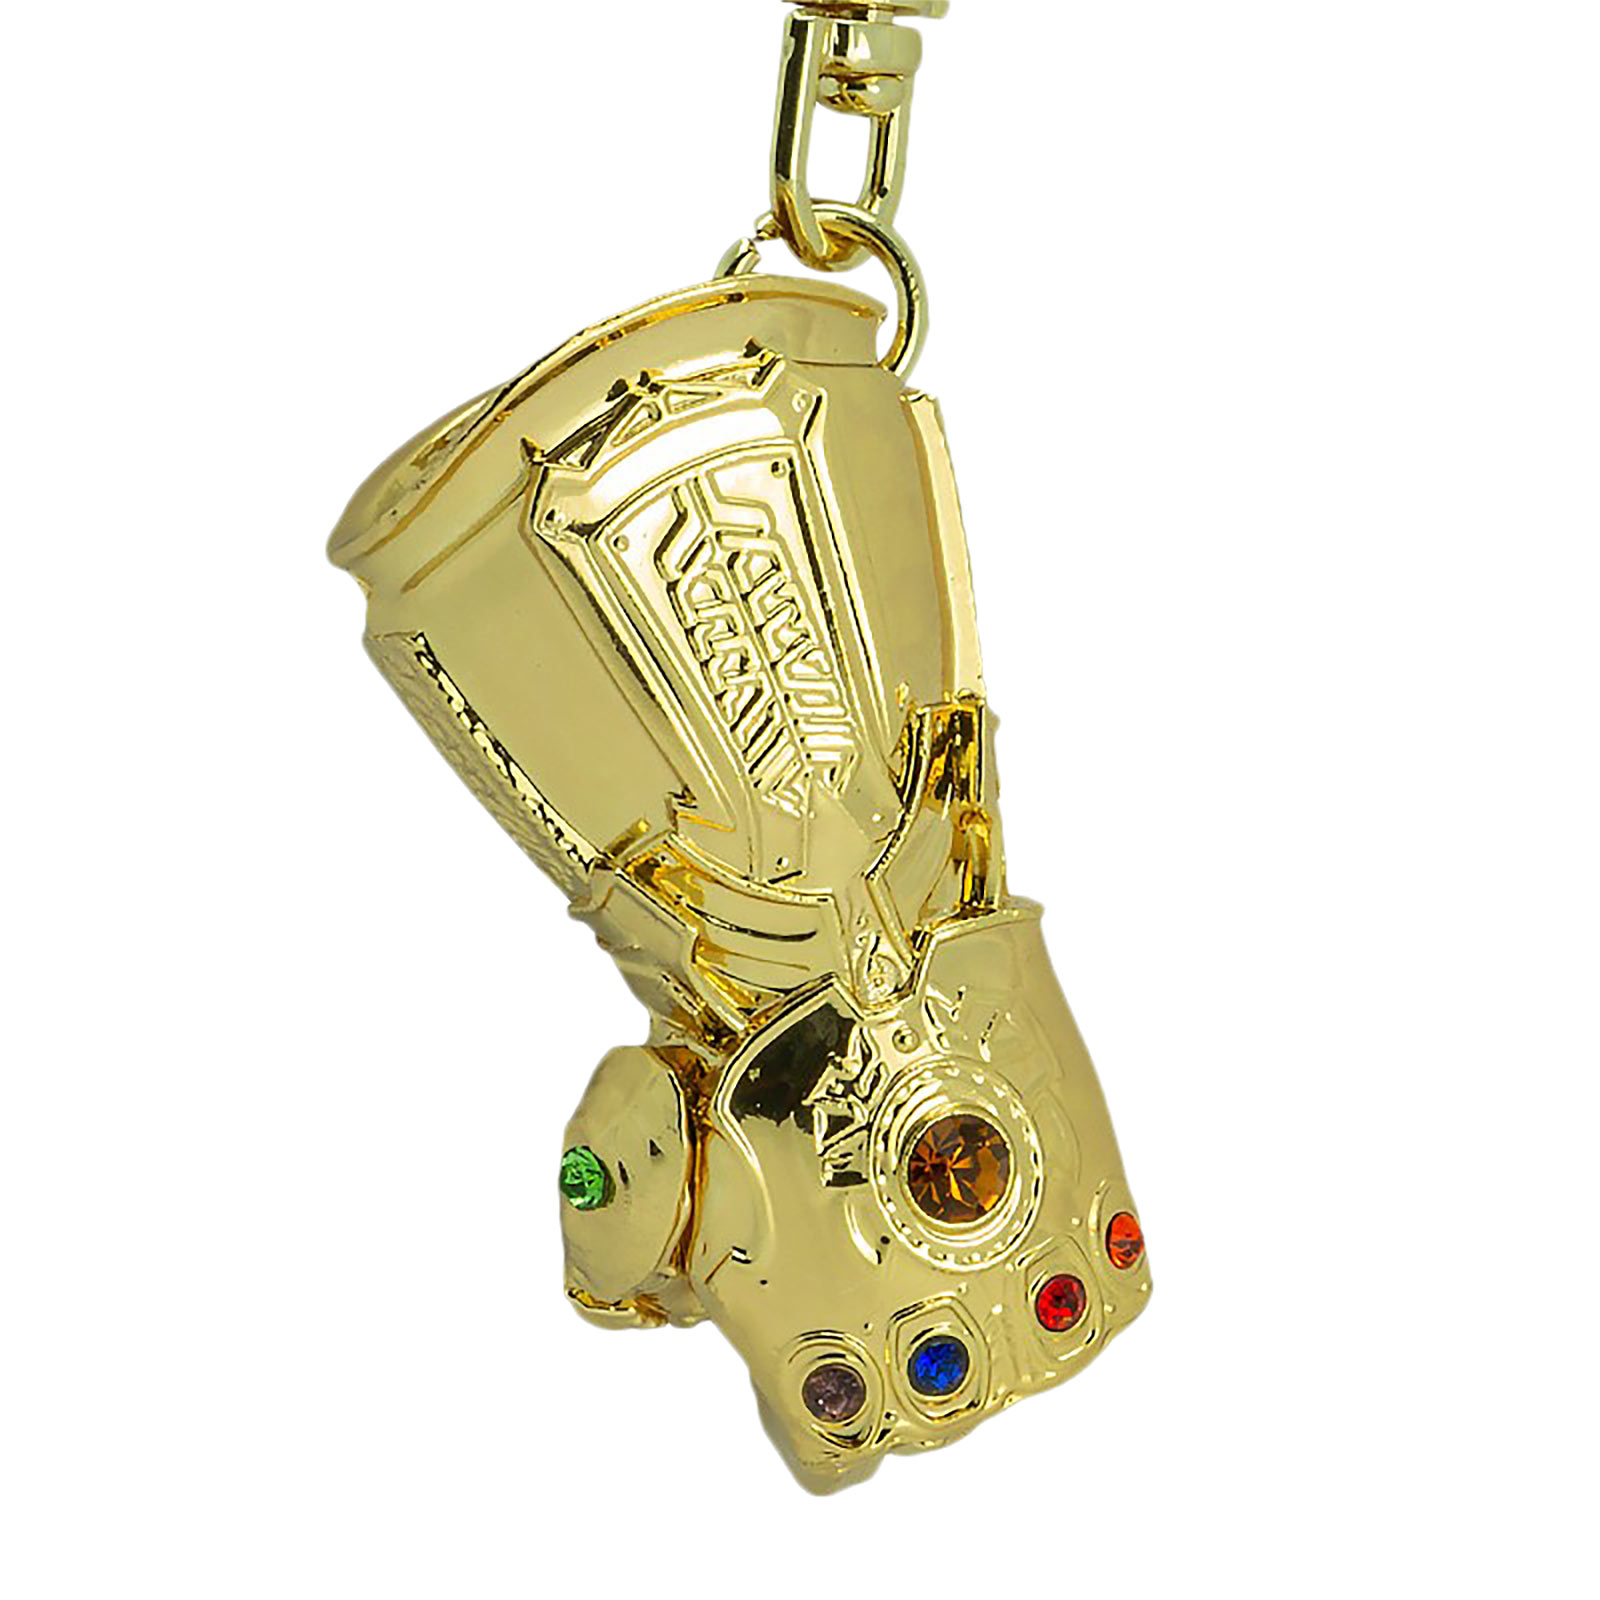 Thanos Infinity Gauntlet Keychain - Avengers